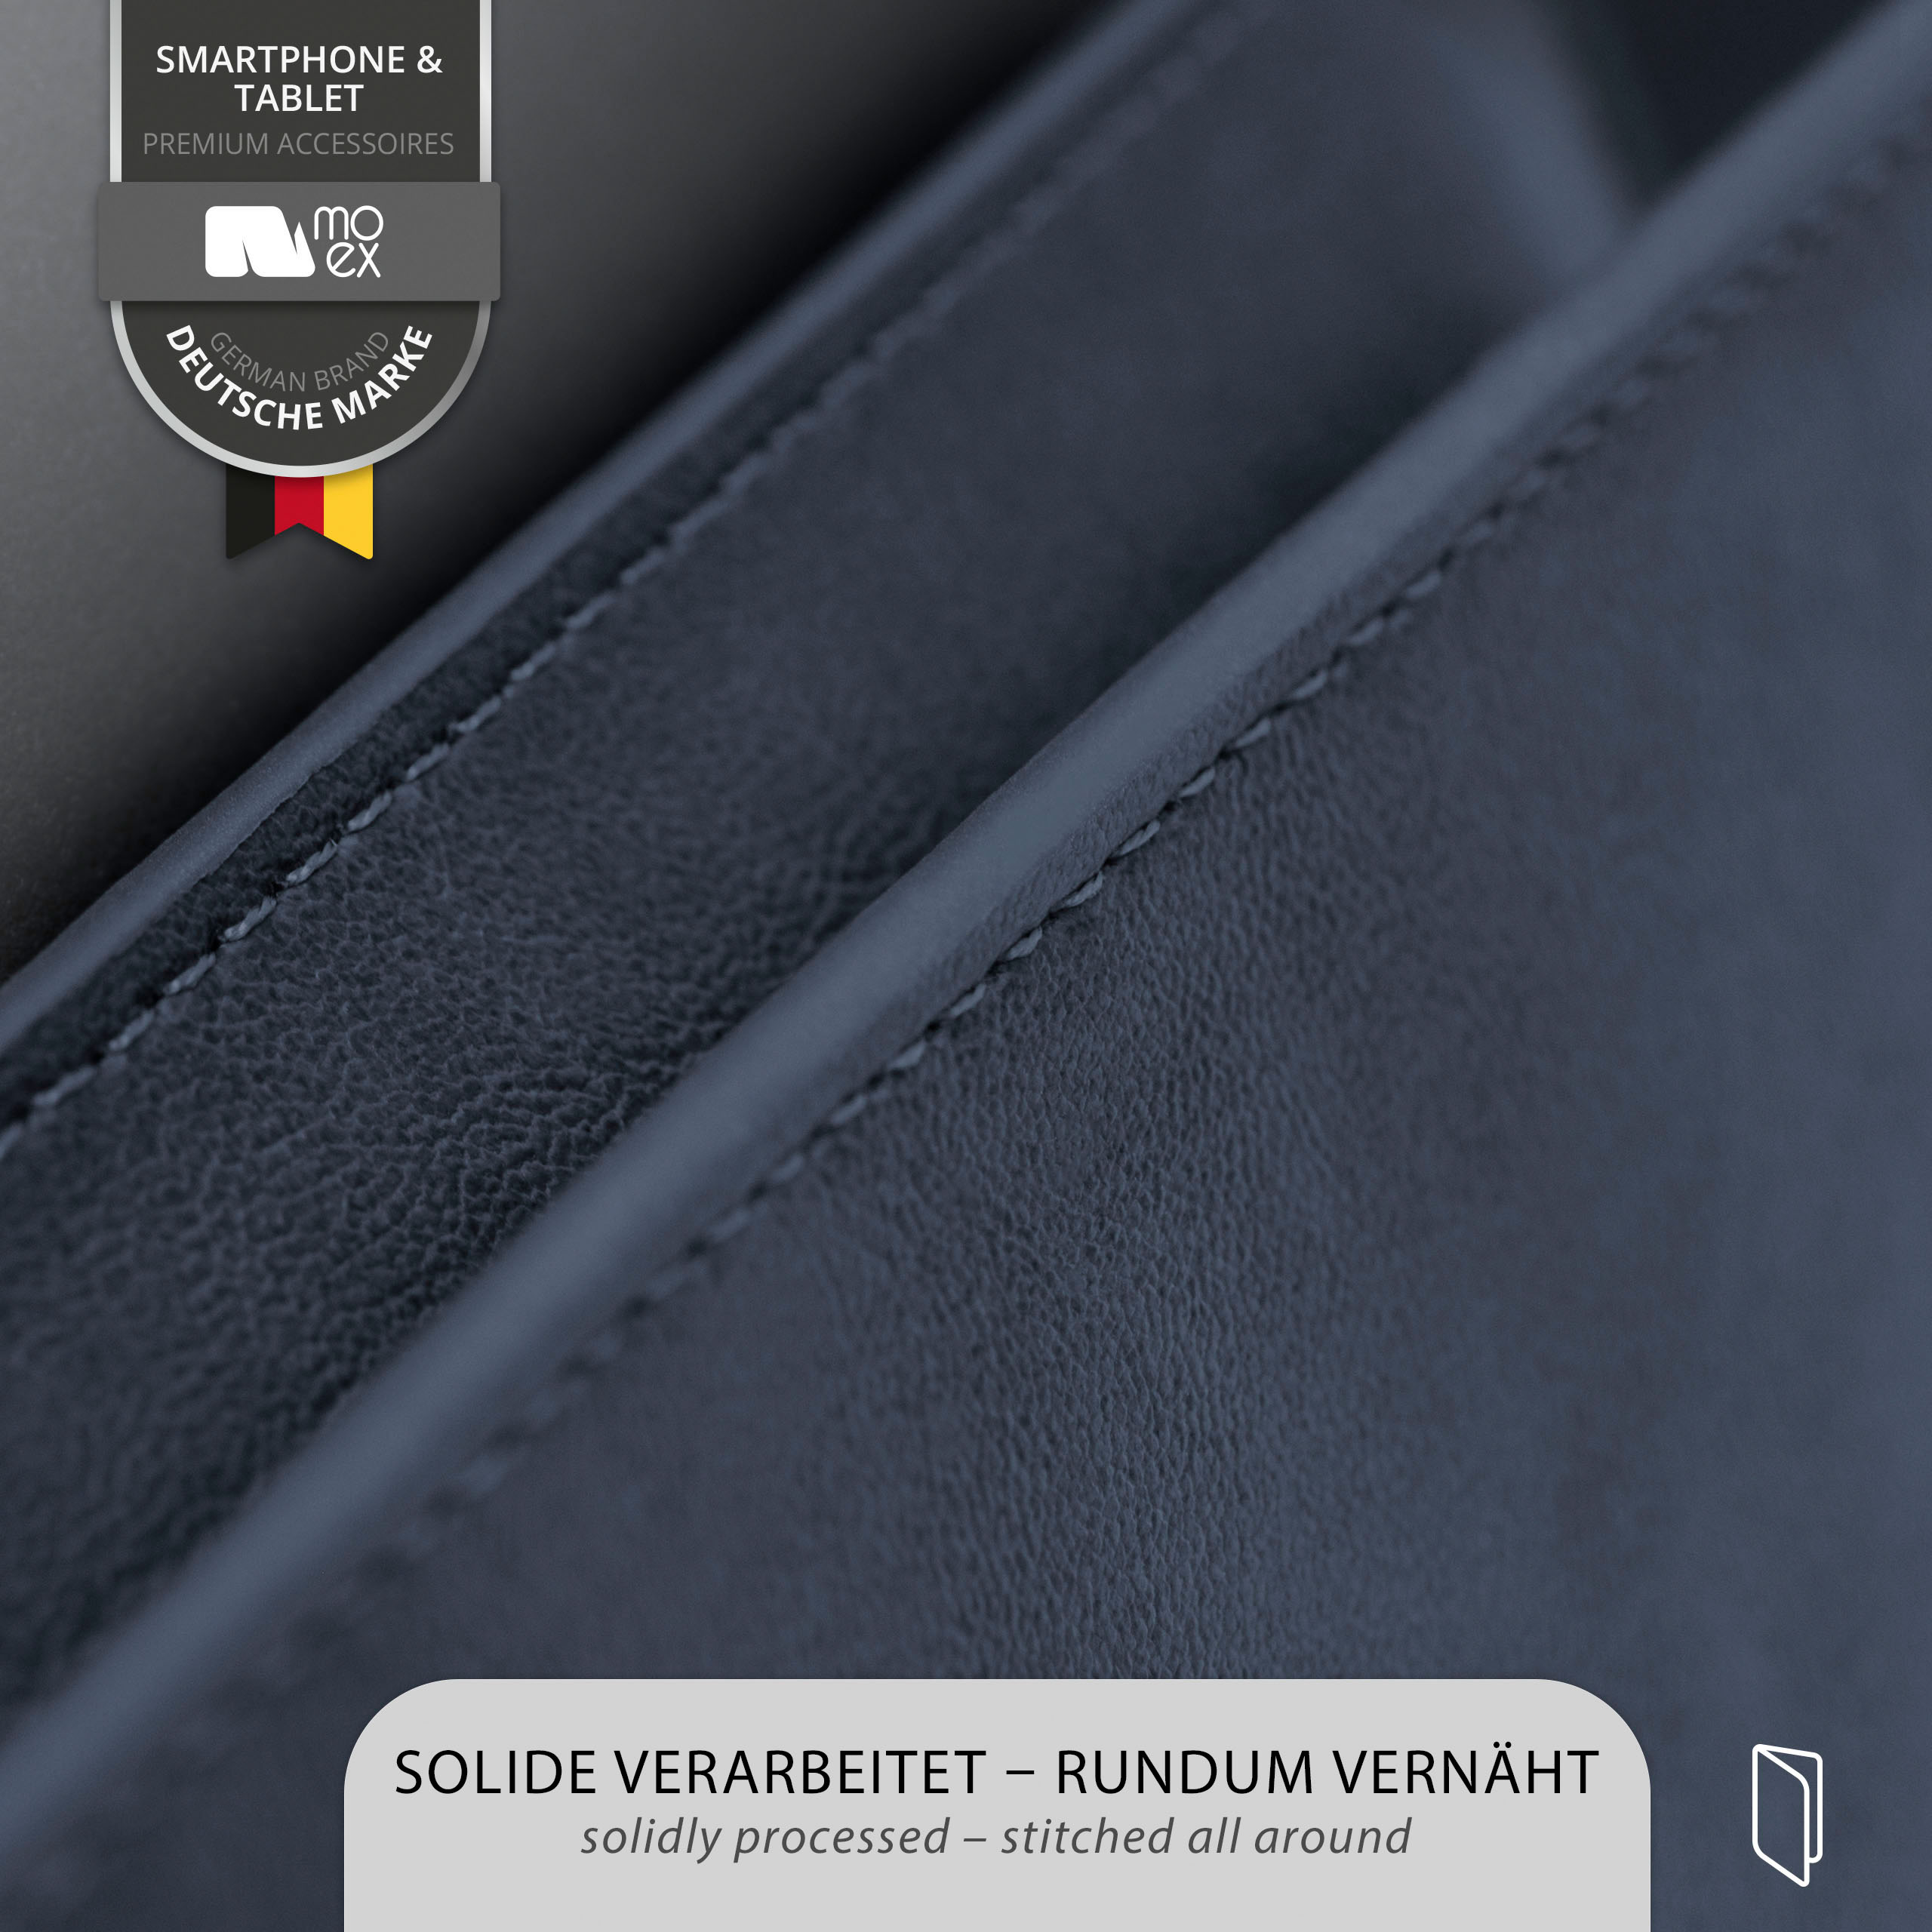 Dunkelblau 5G, MOEX Cover, Purse OnePlus, Flip Nord N10 Case,